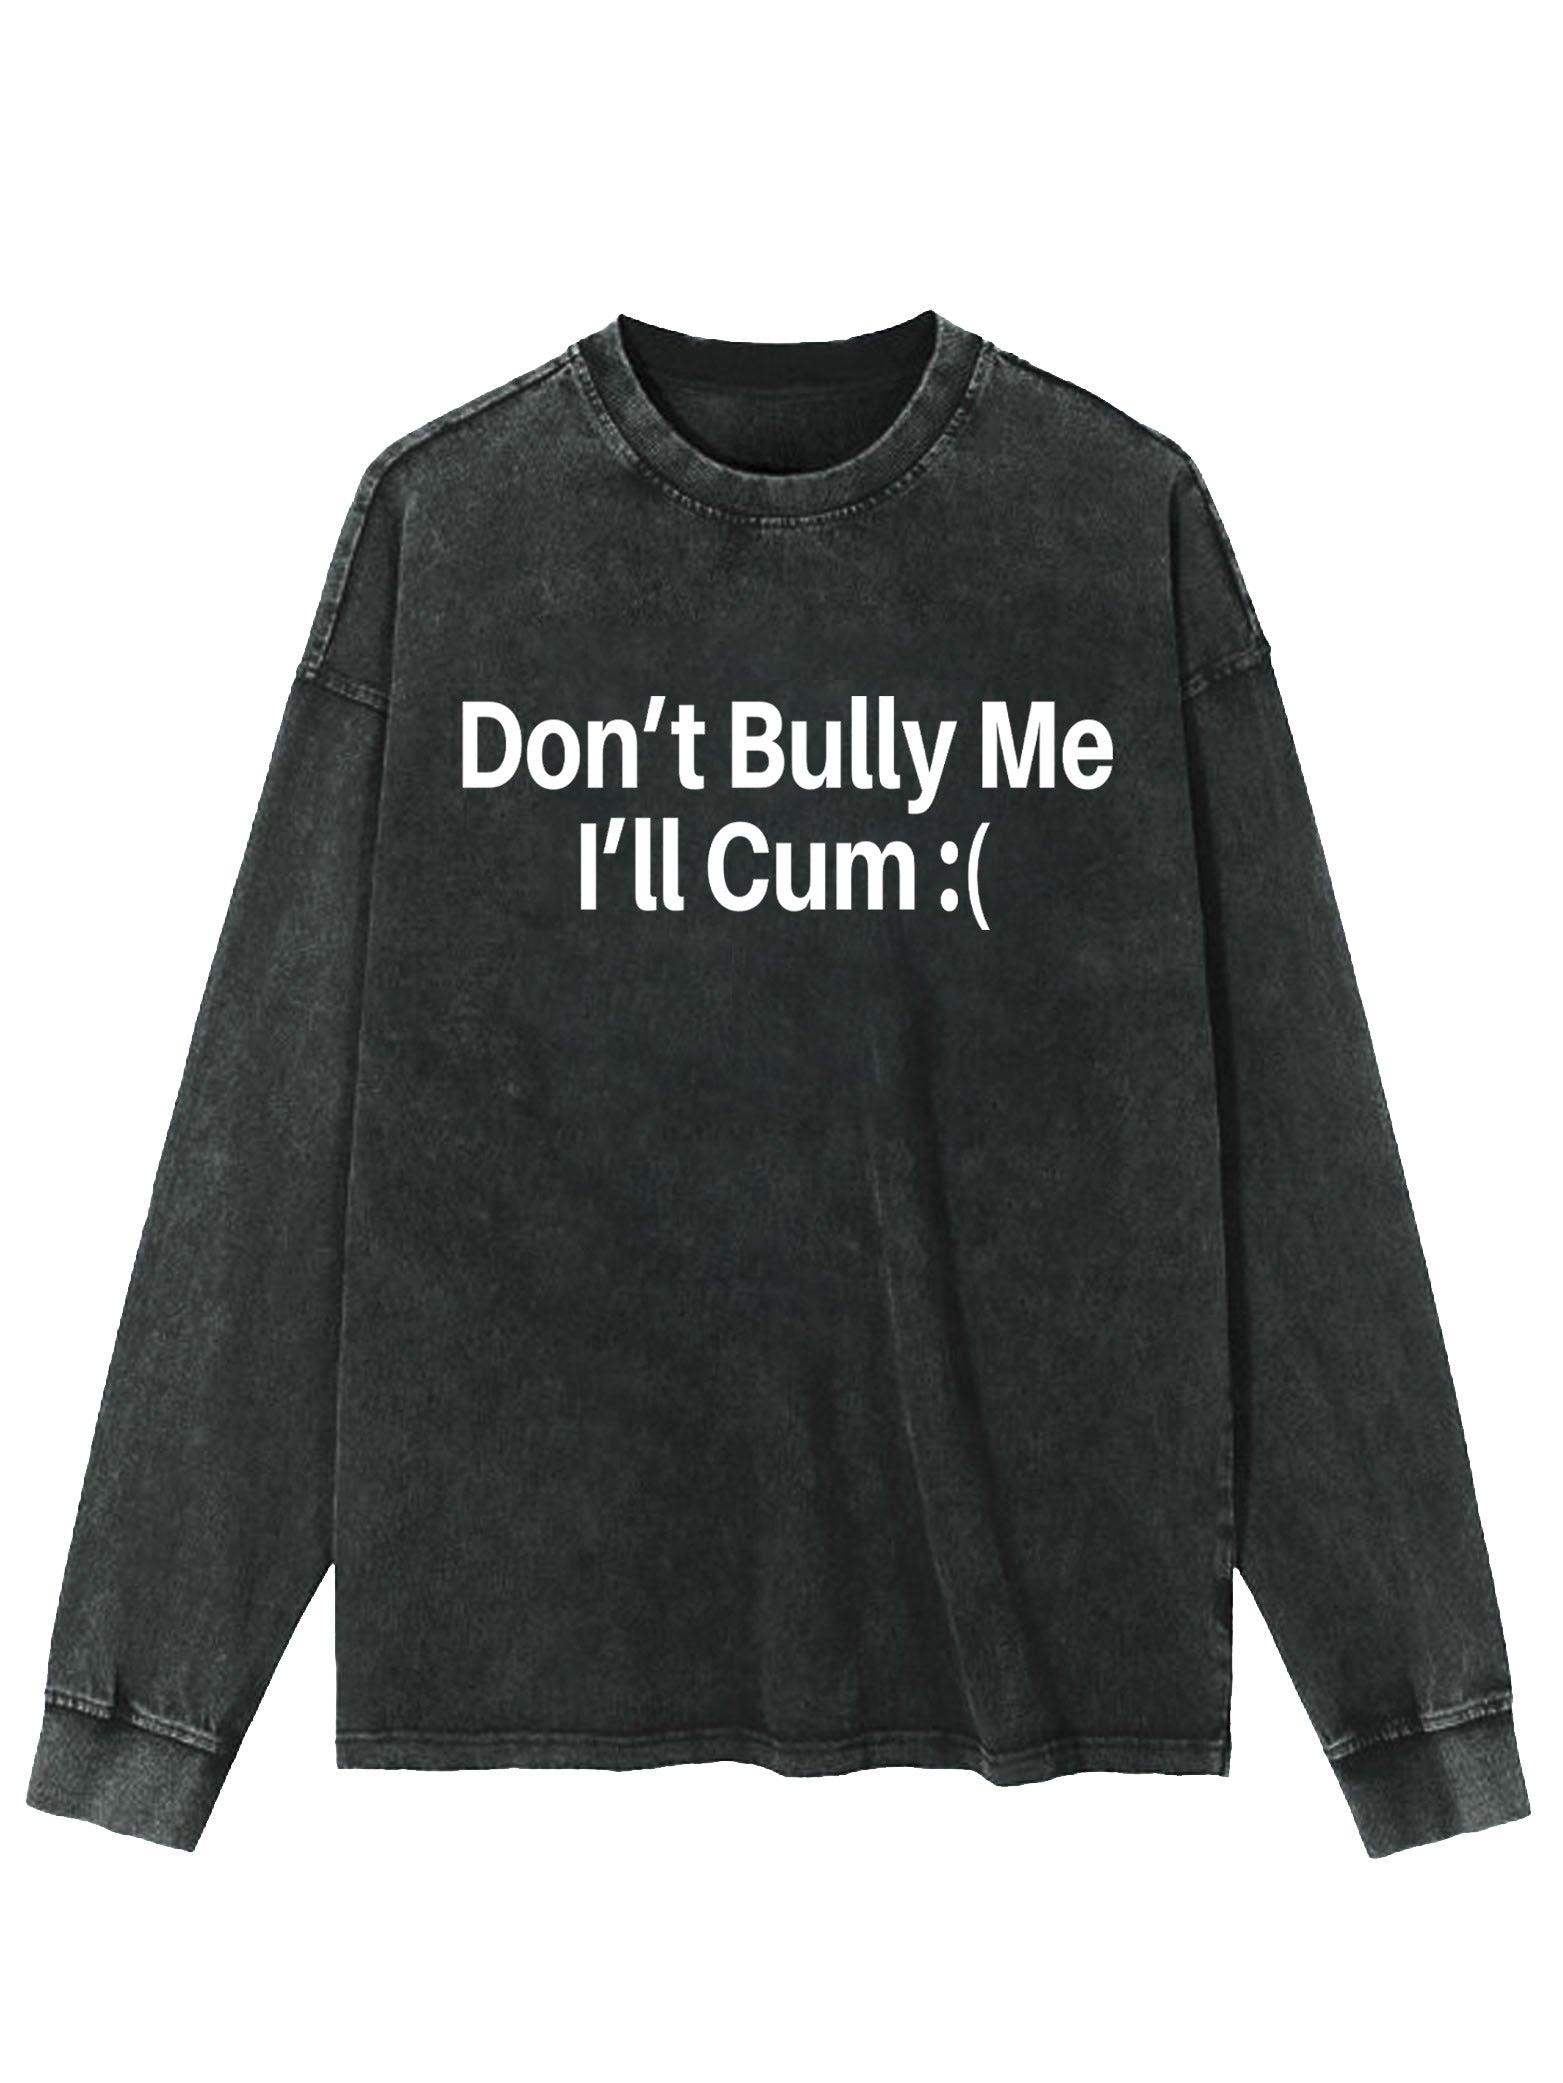 Don't Bully Me Washed Sweatshirt